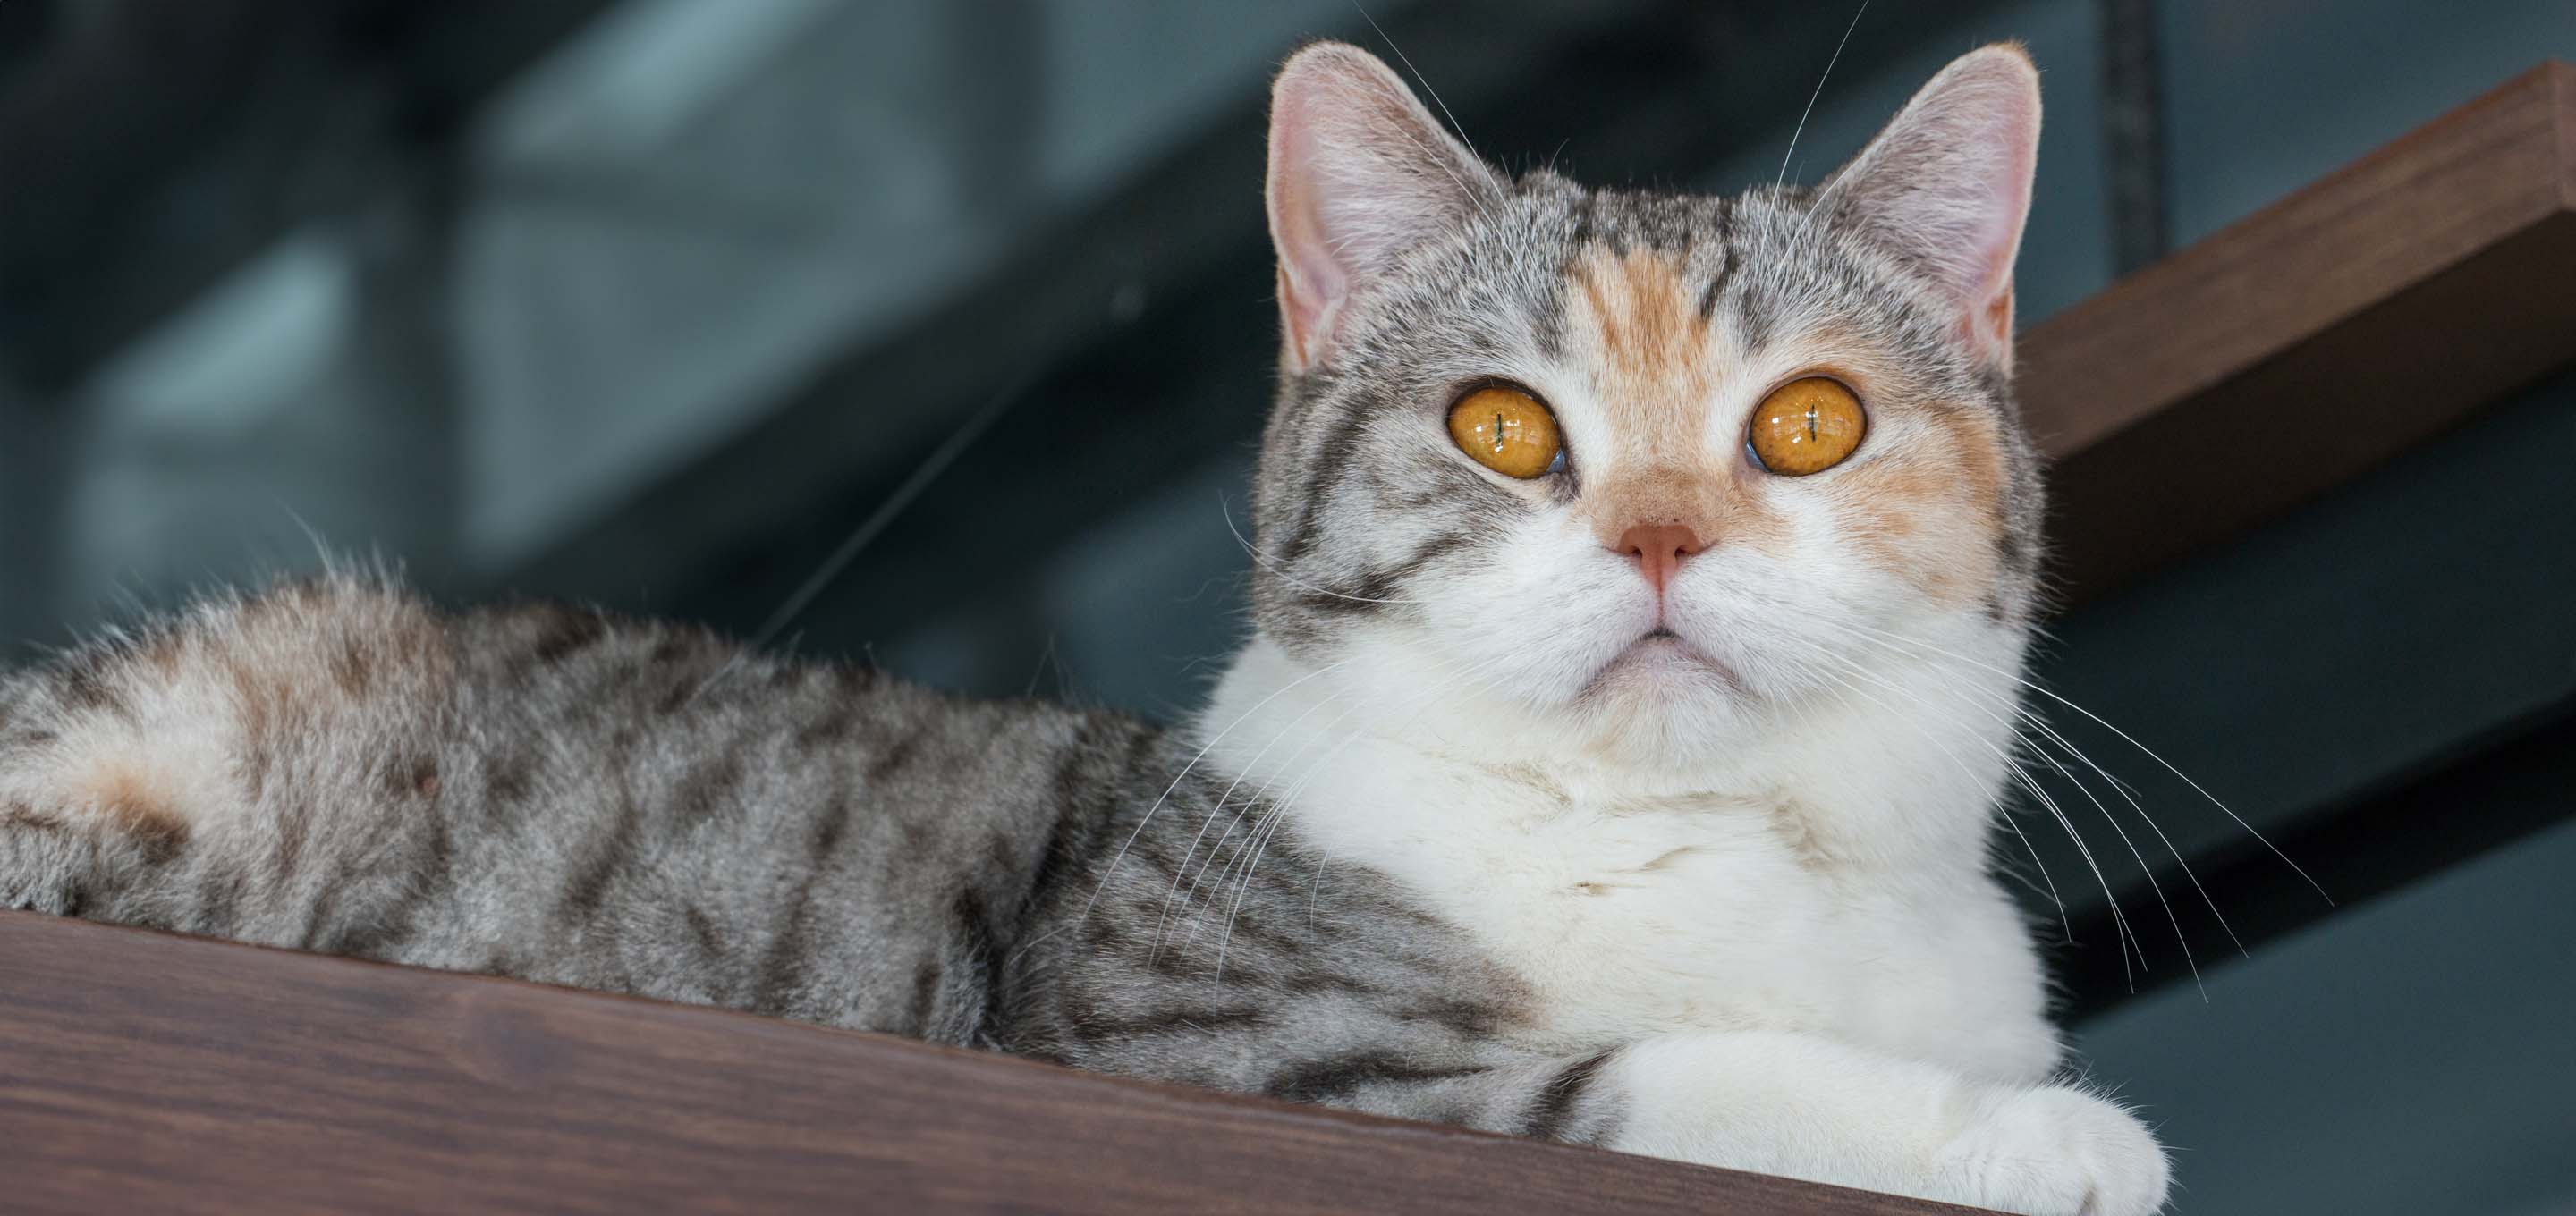 American Wirehair cat sitting on shelf image